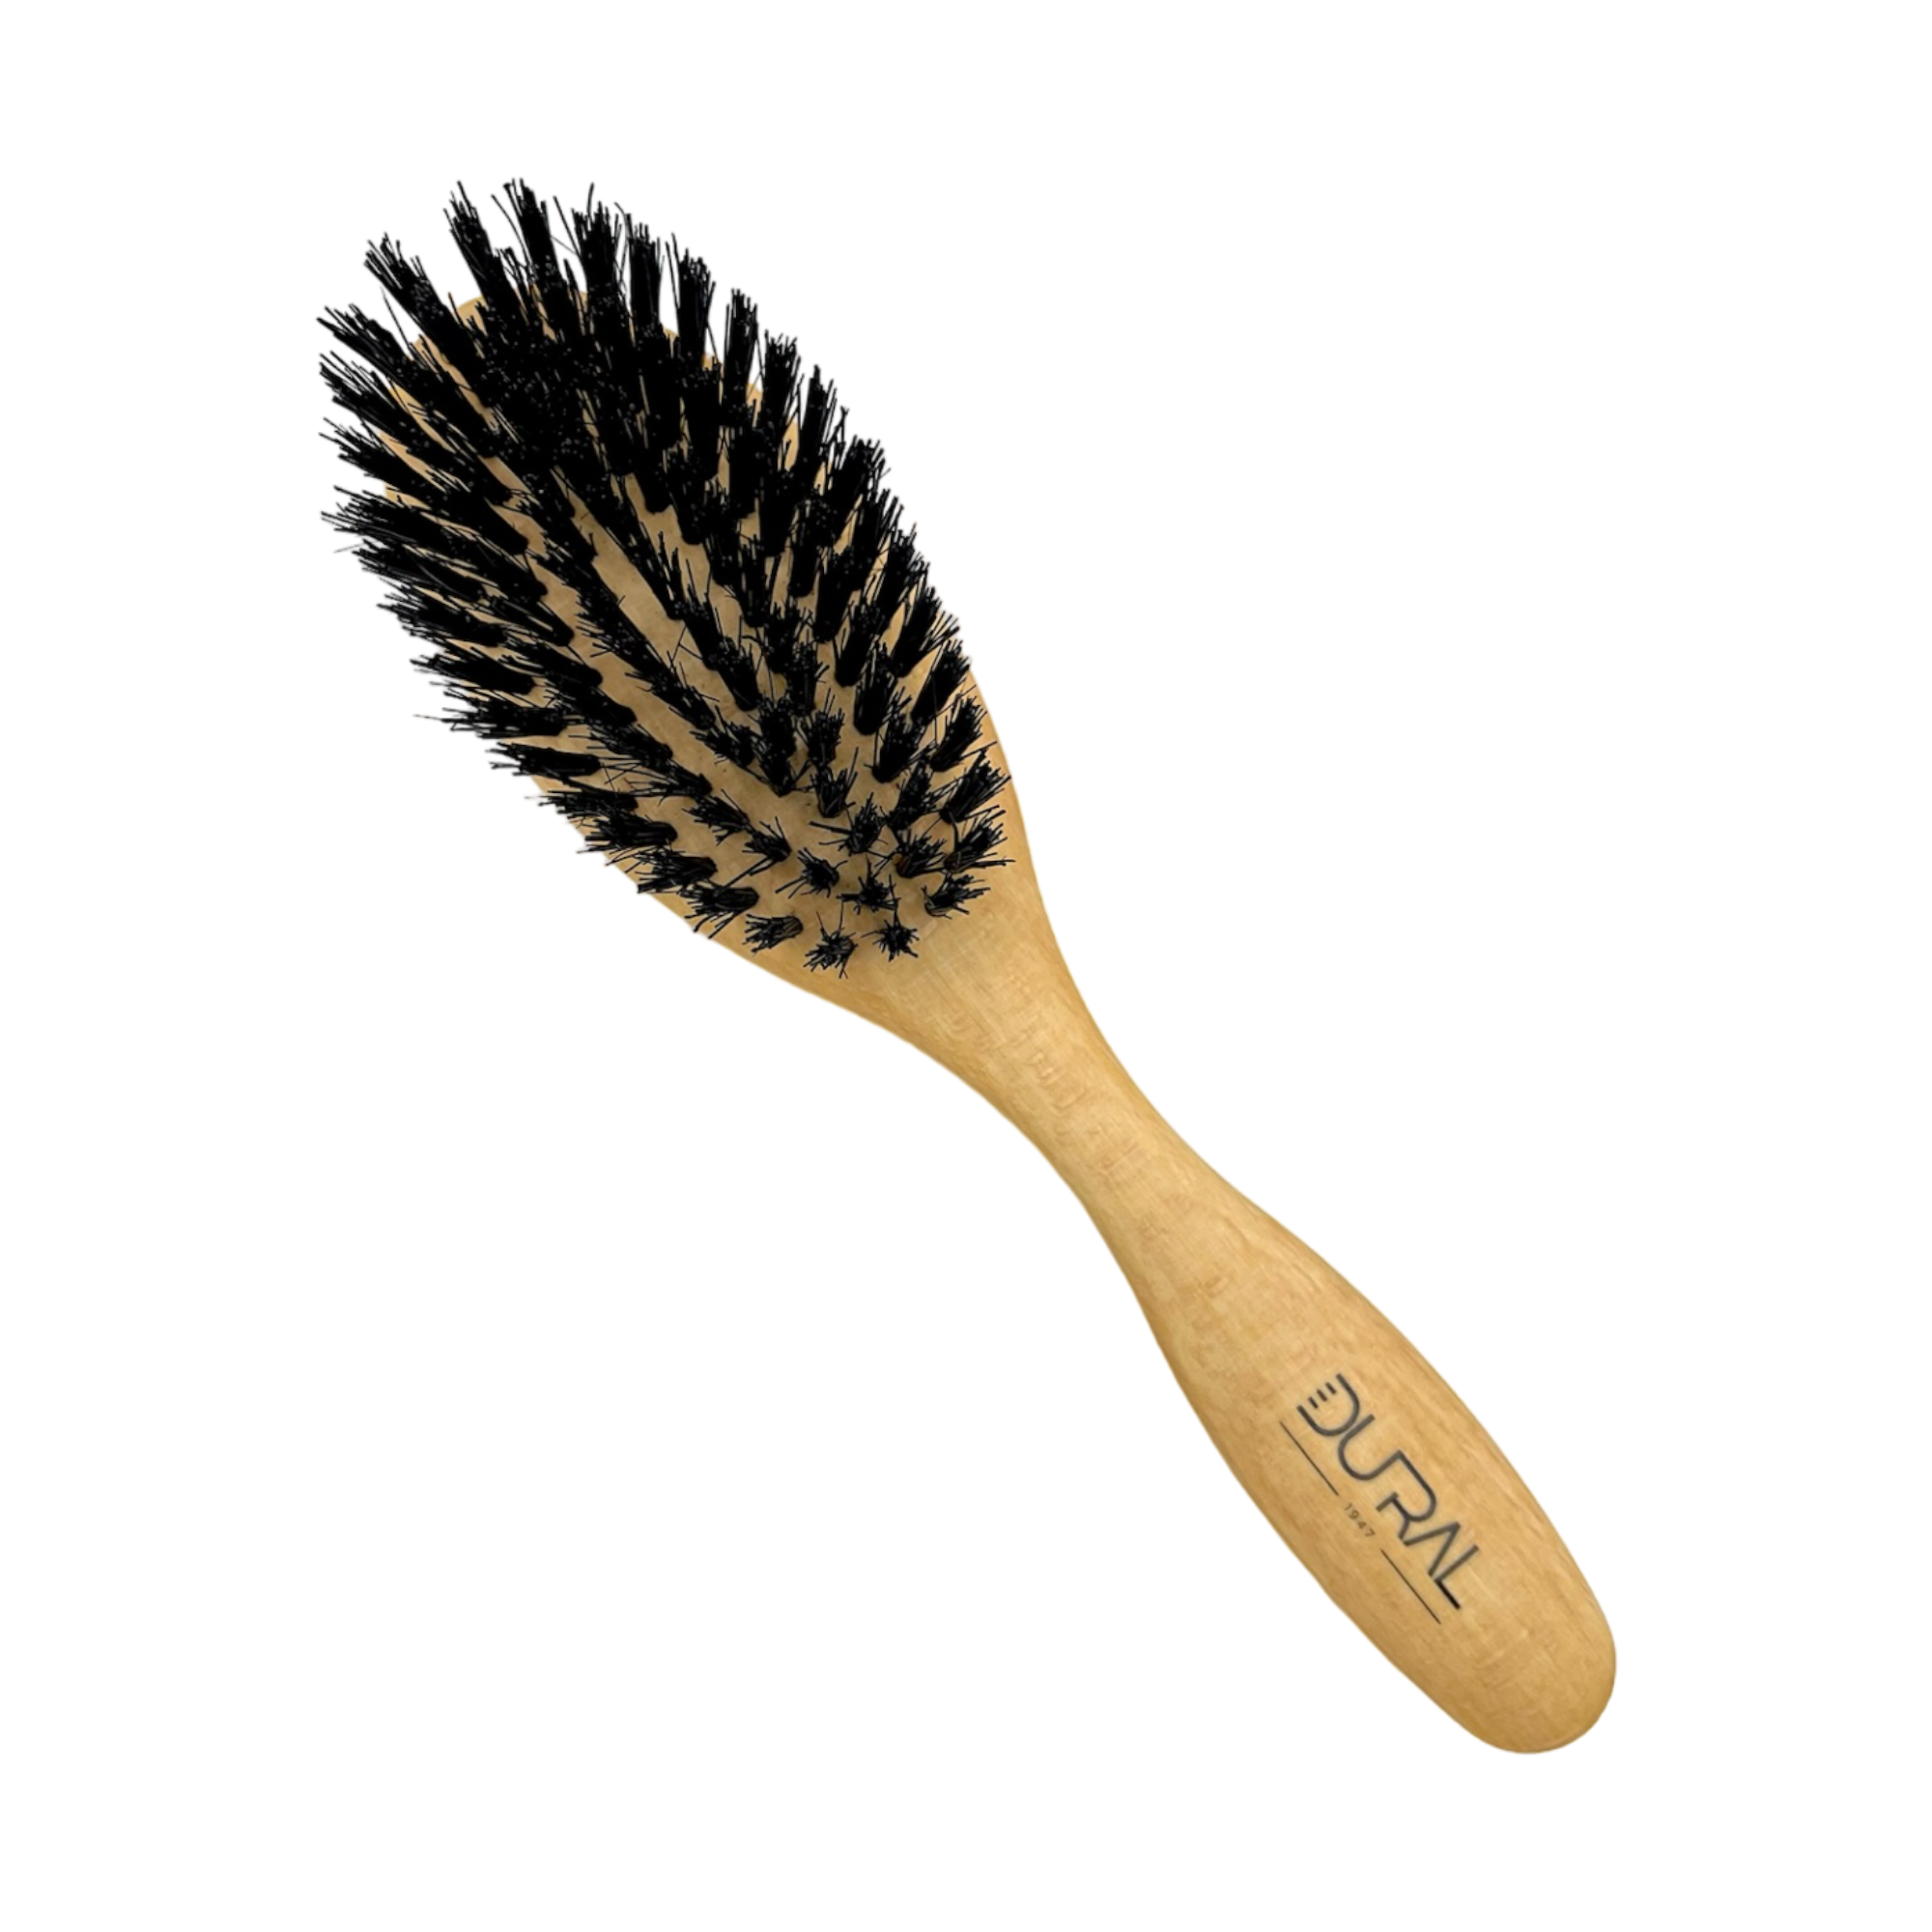 Dural Beech wood hair brush with boar bristles - 7 rows